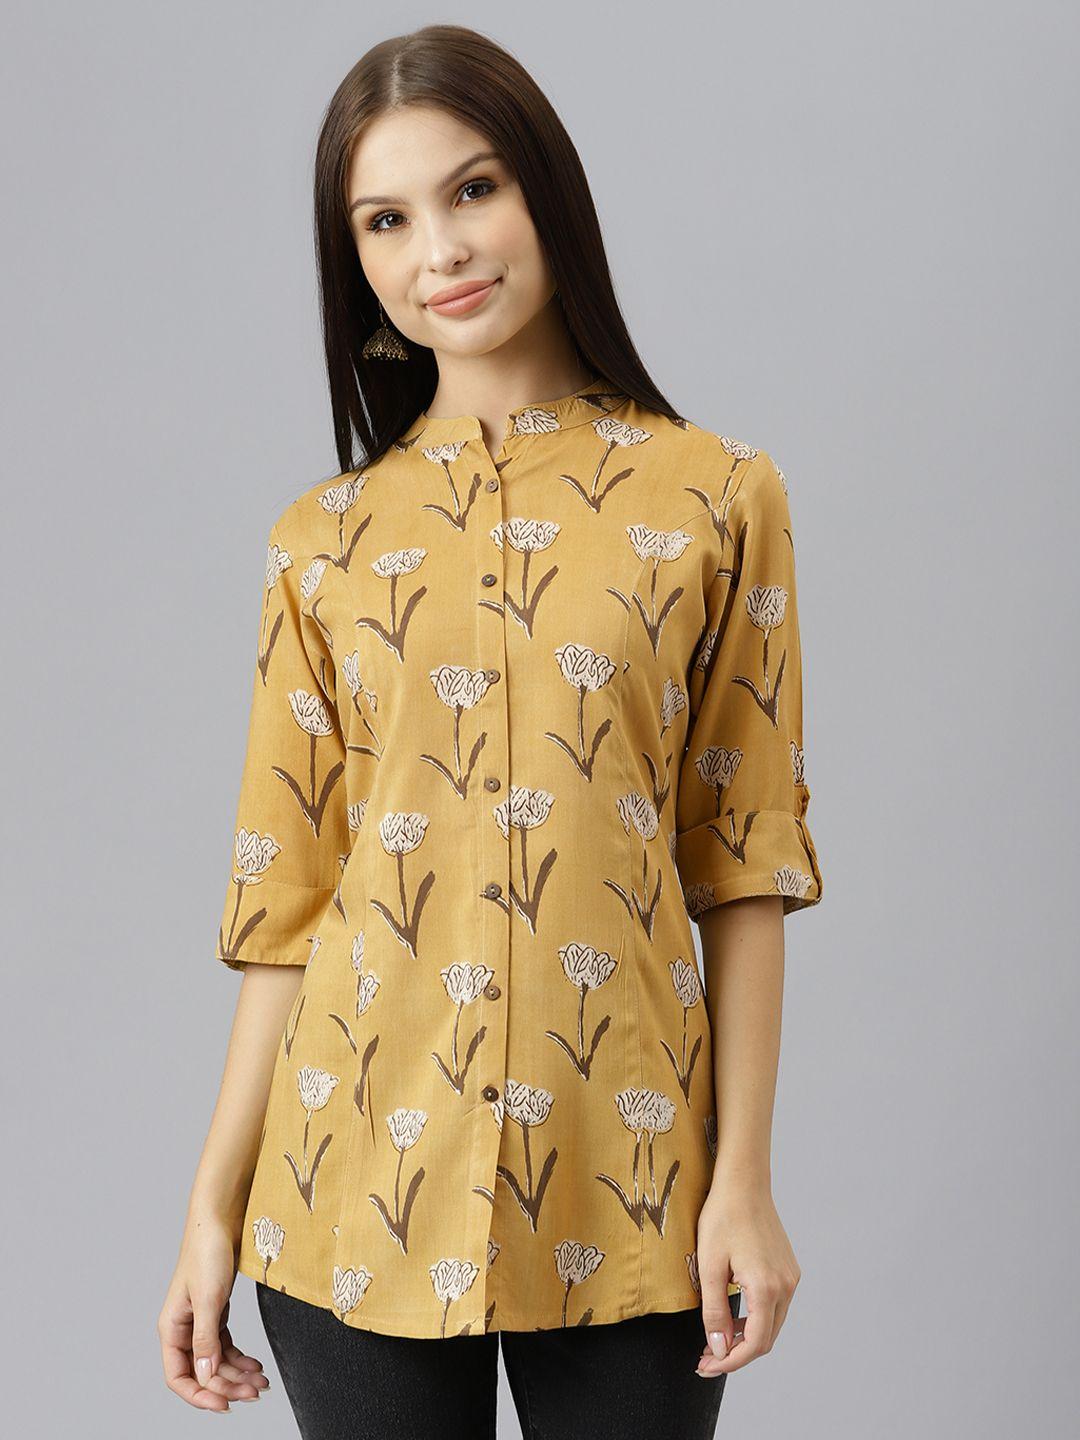 divena-mustard-yellow-floral-print-mandarin-collar-roll-up-sleeves-shirt-style-top